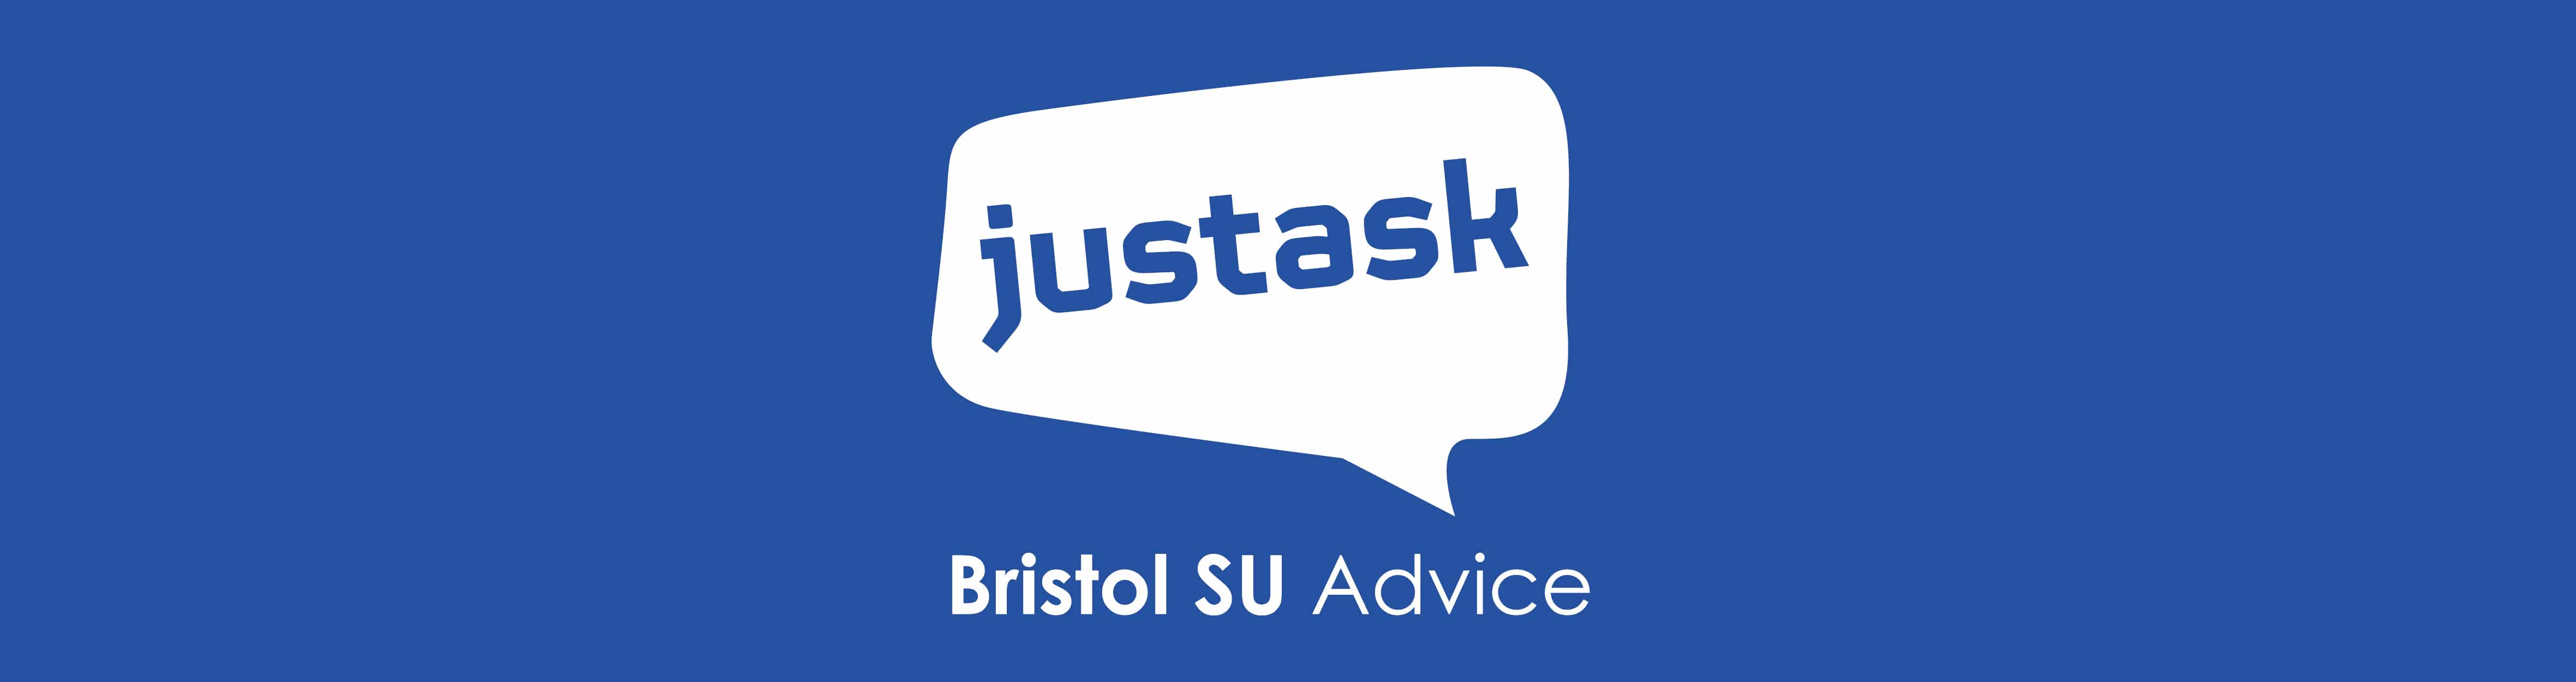 Just Ask Logo - Bristol SU | Advice & Support